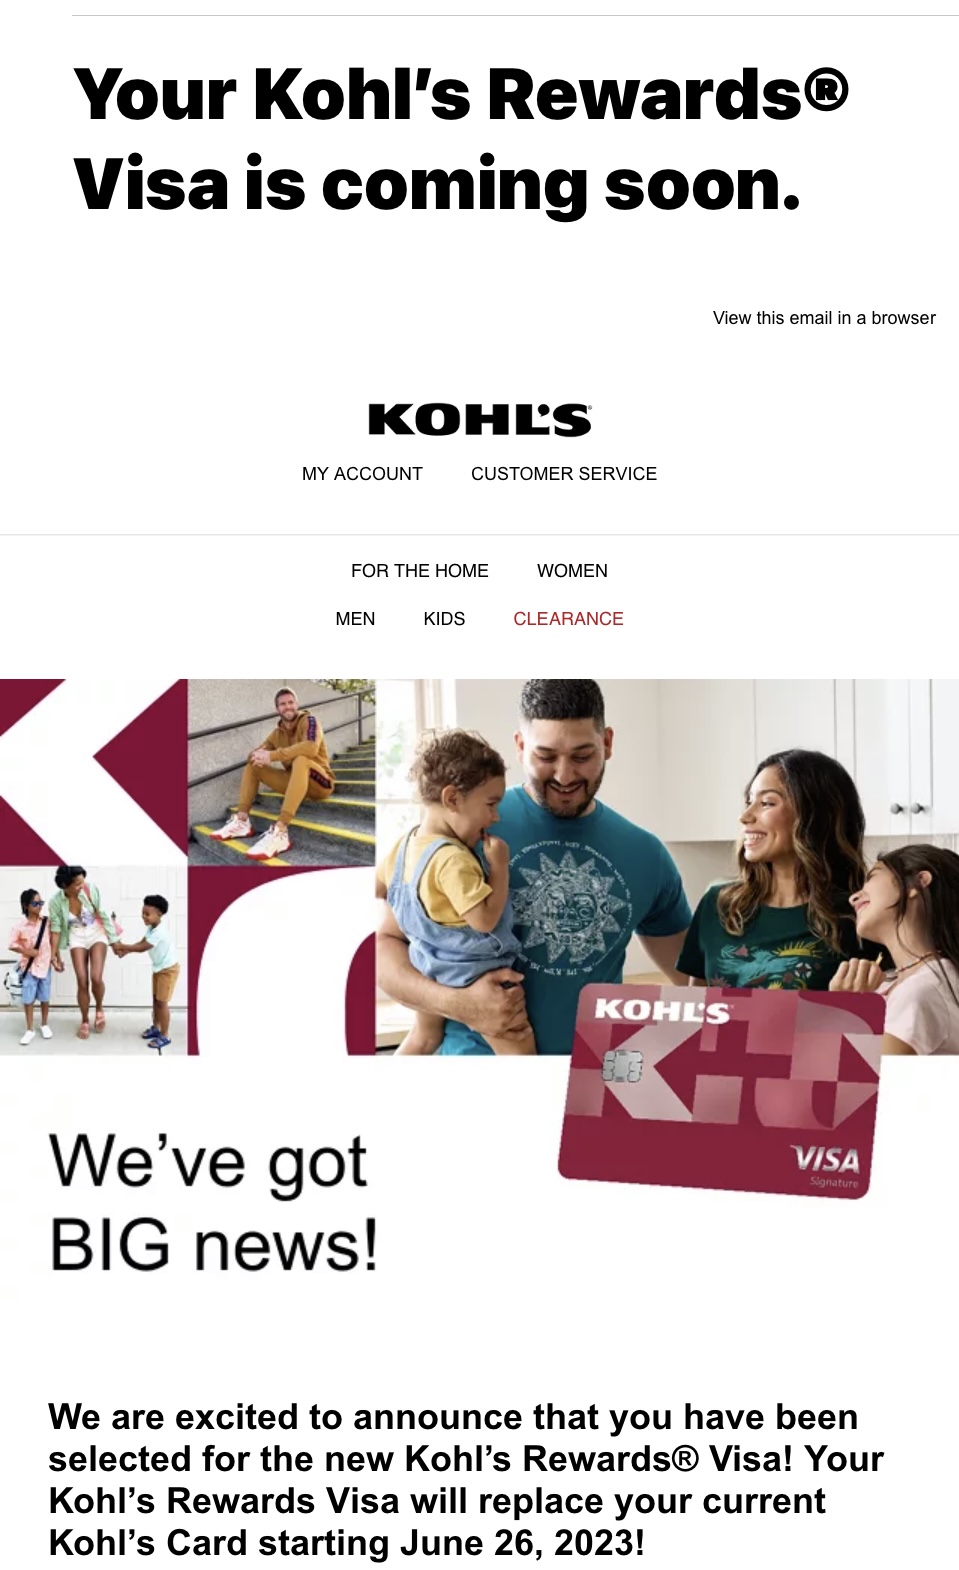 Kohl's Capital One Credit Card Login